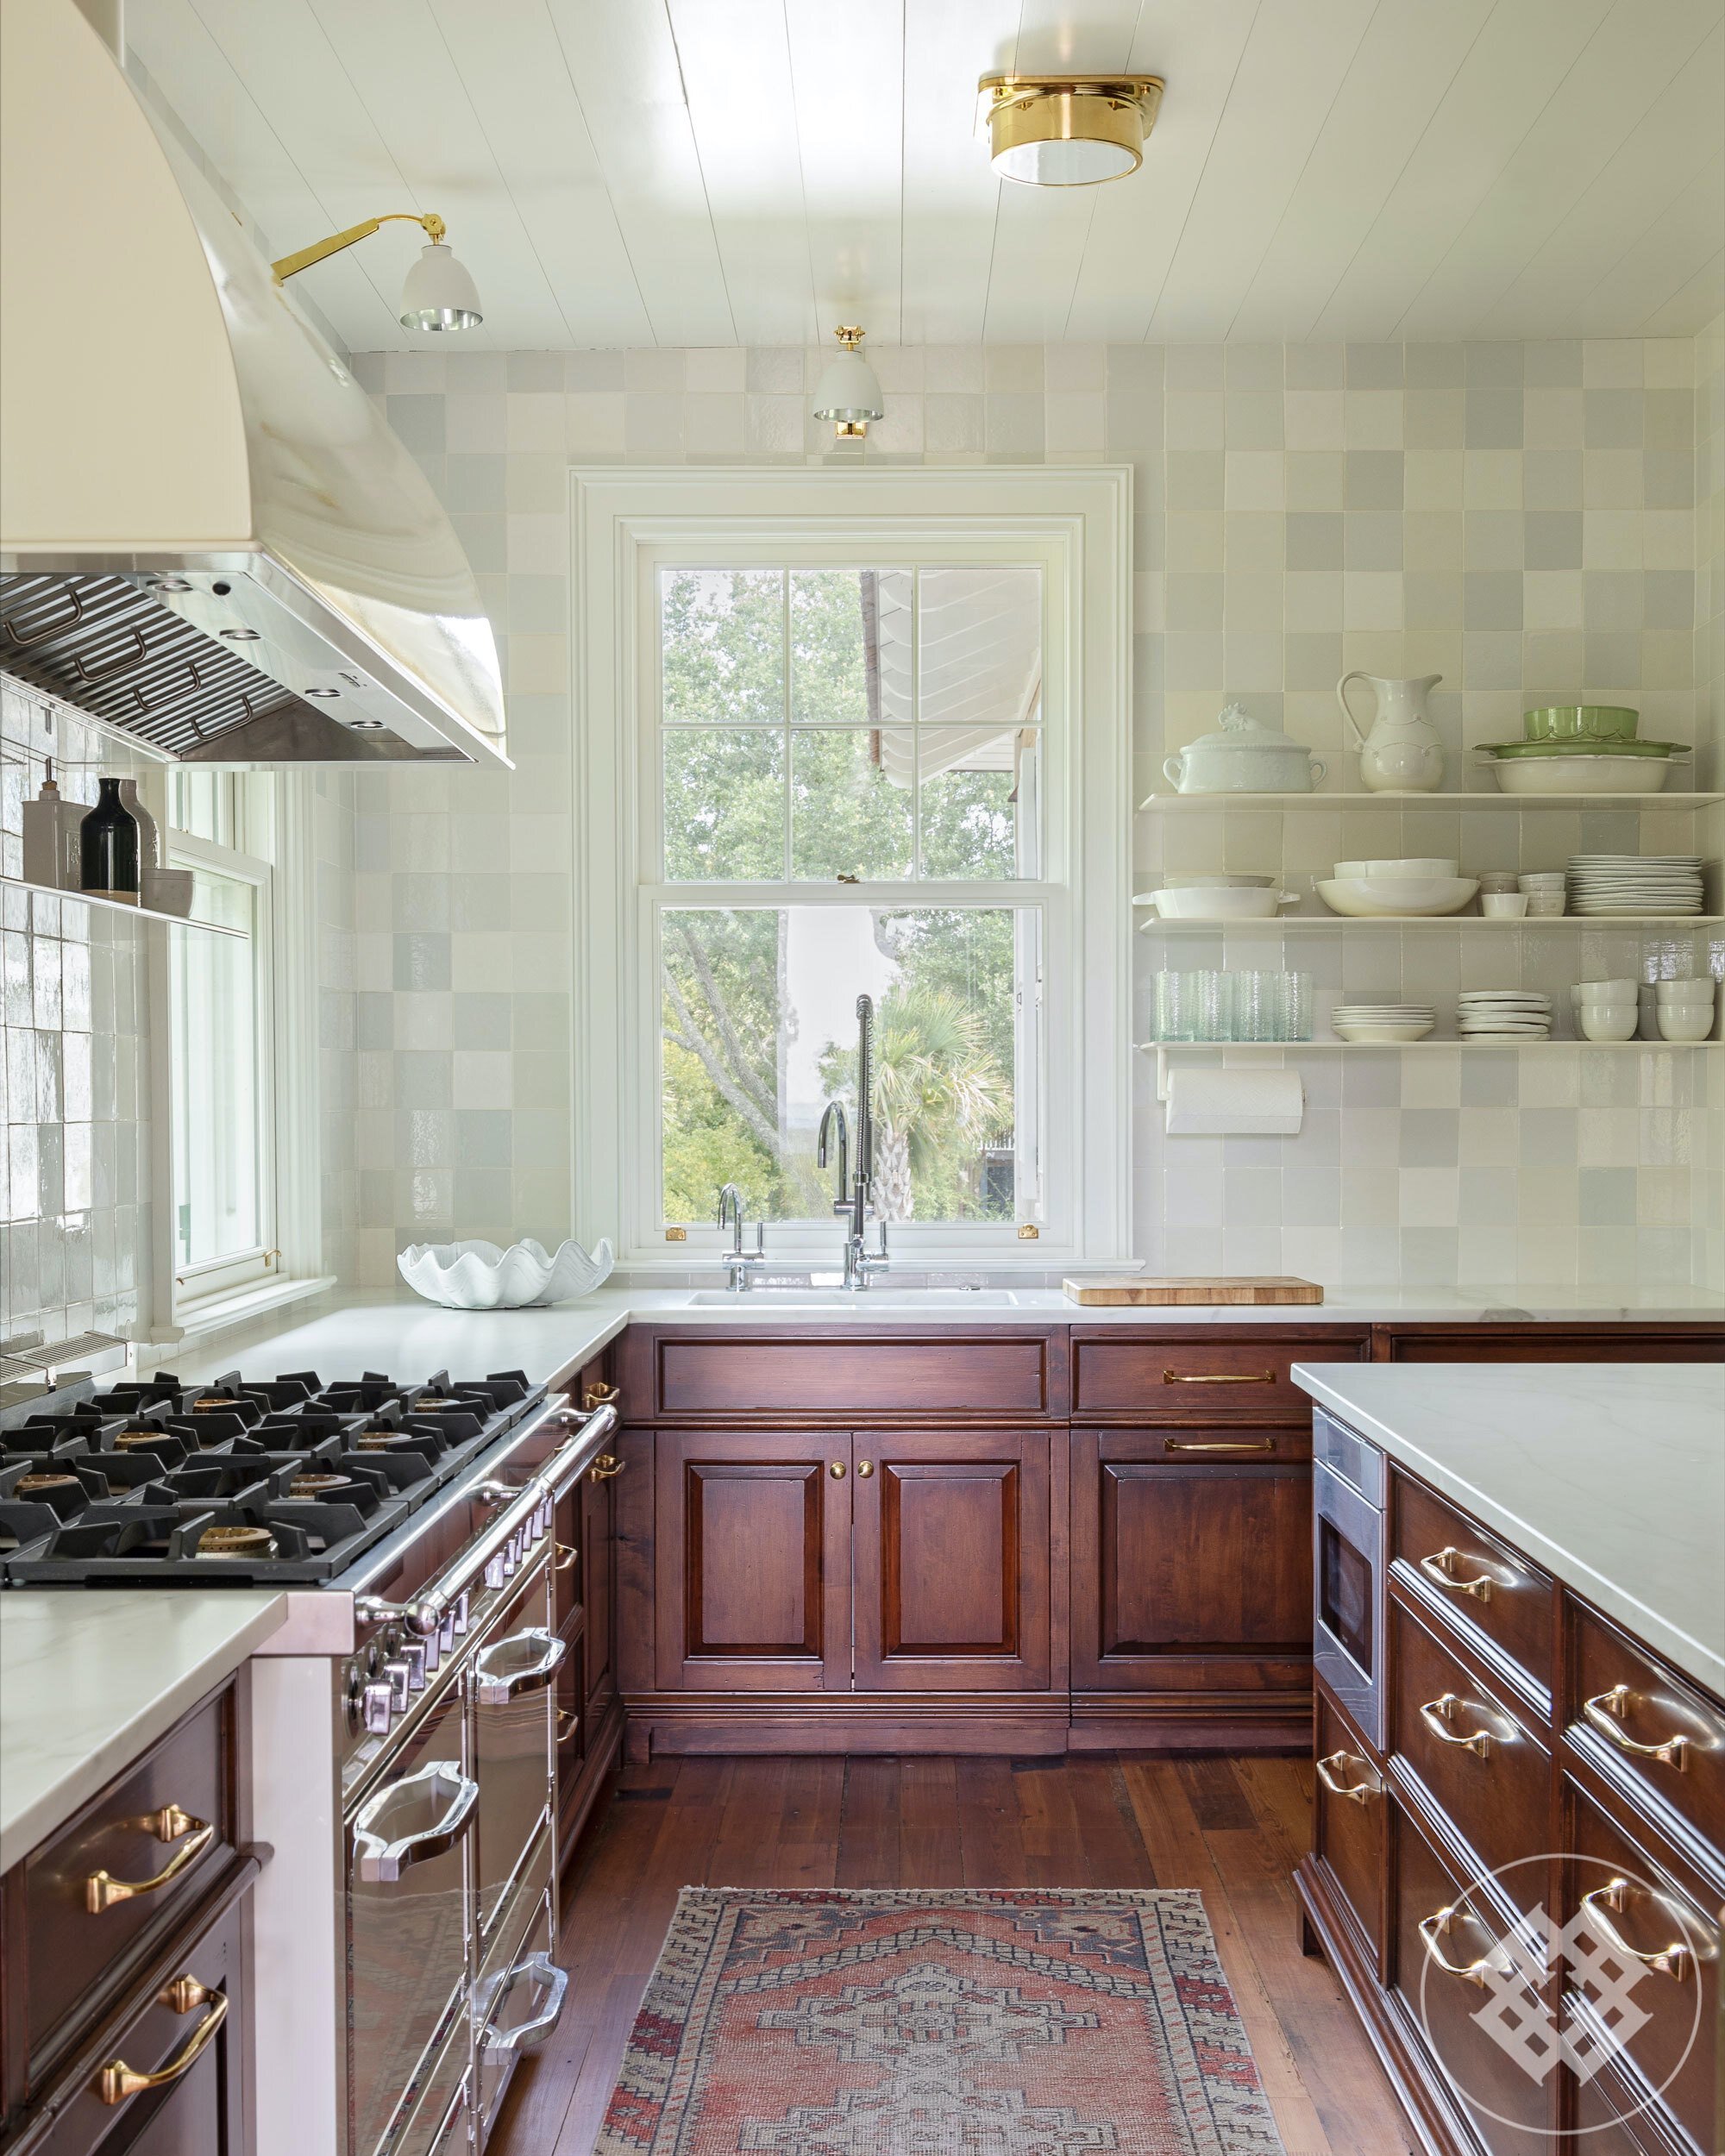 bcb-kitchen-white-namib-marble-countertops-delft-mosiac-tile-backsplash-with-floating-shelves.jpg